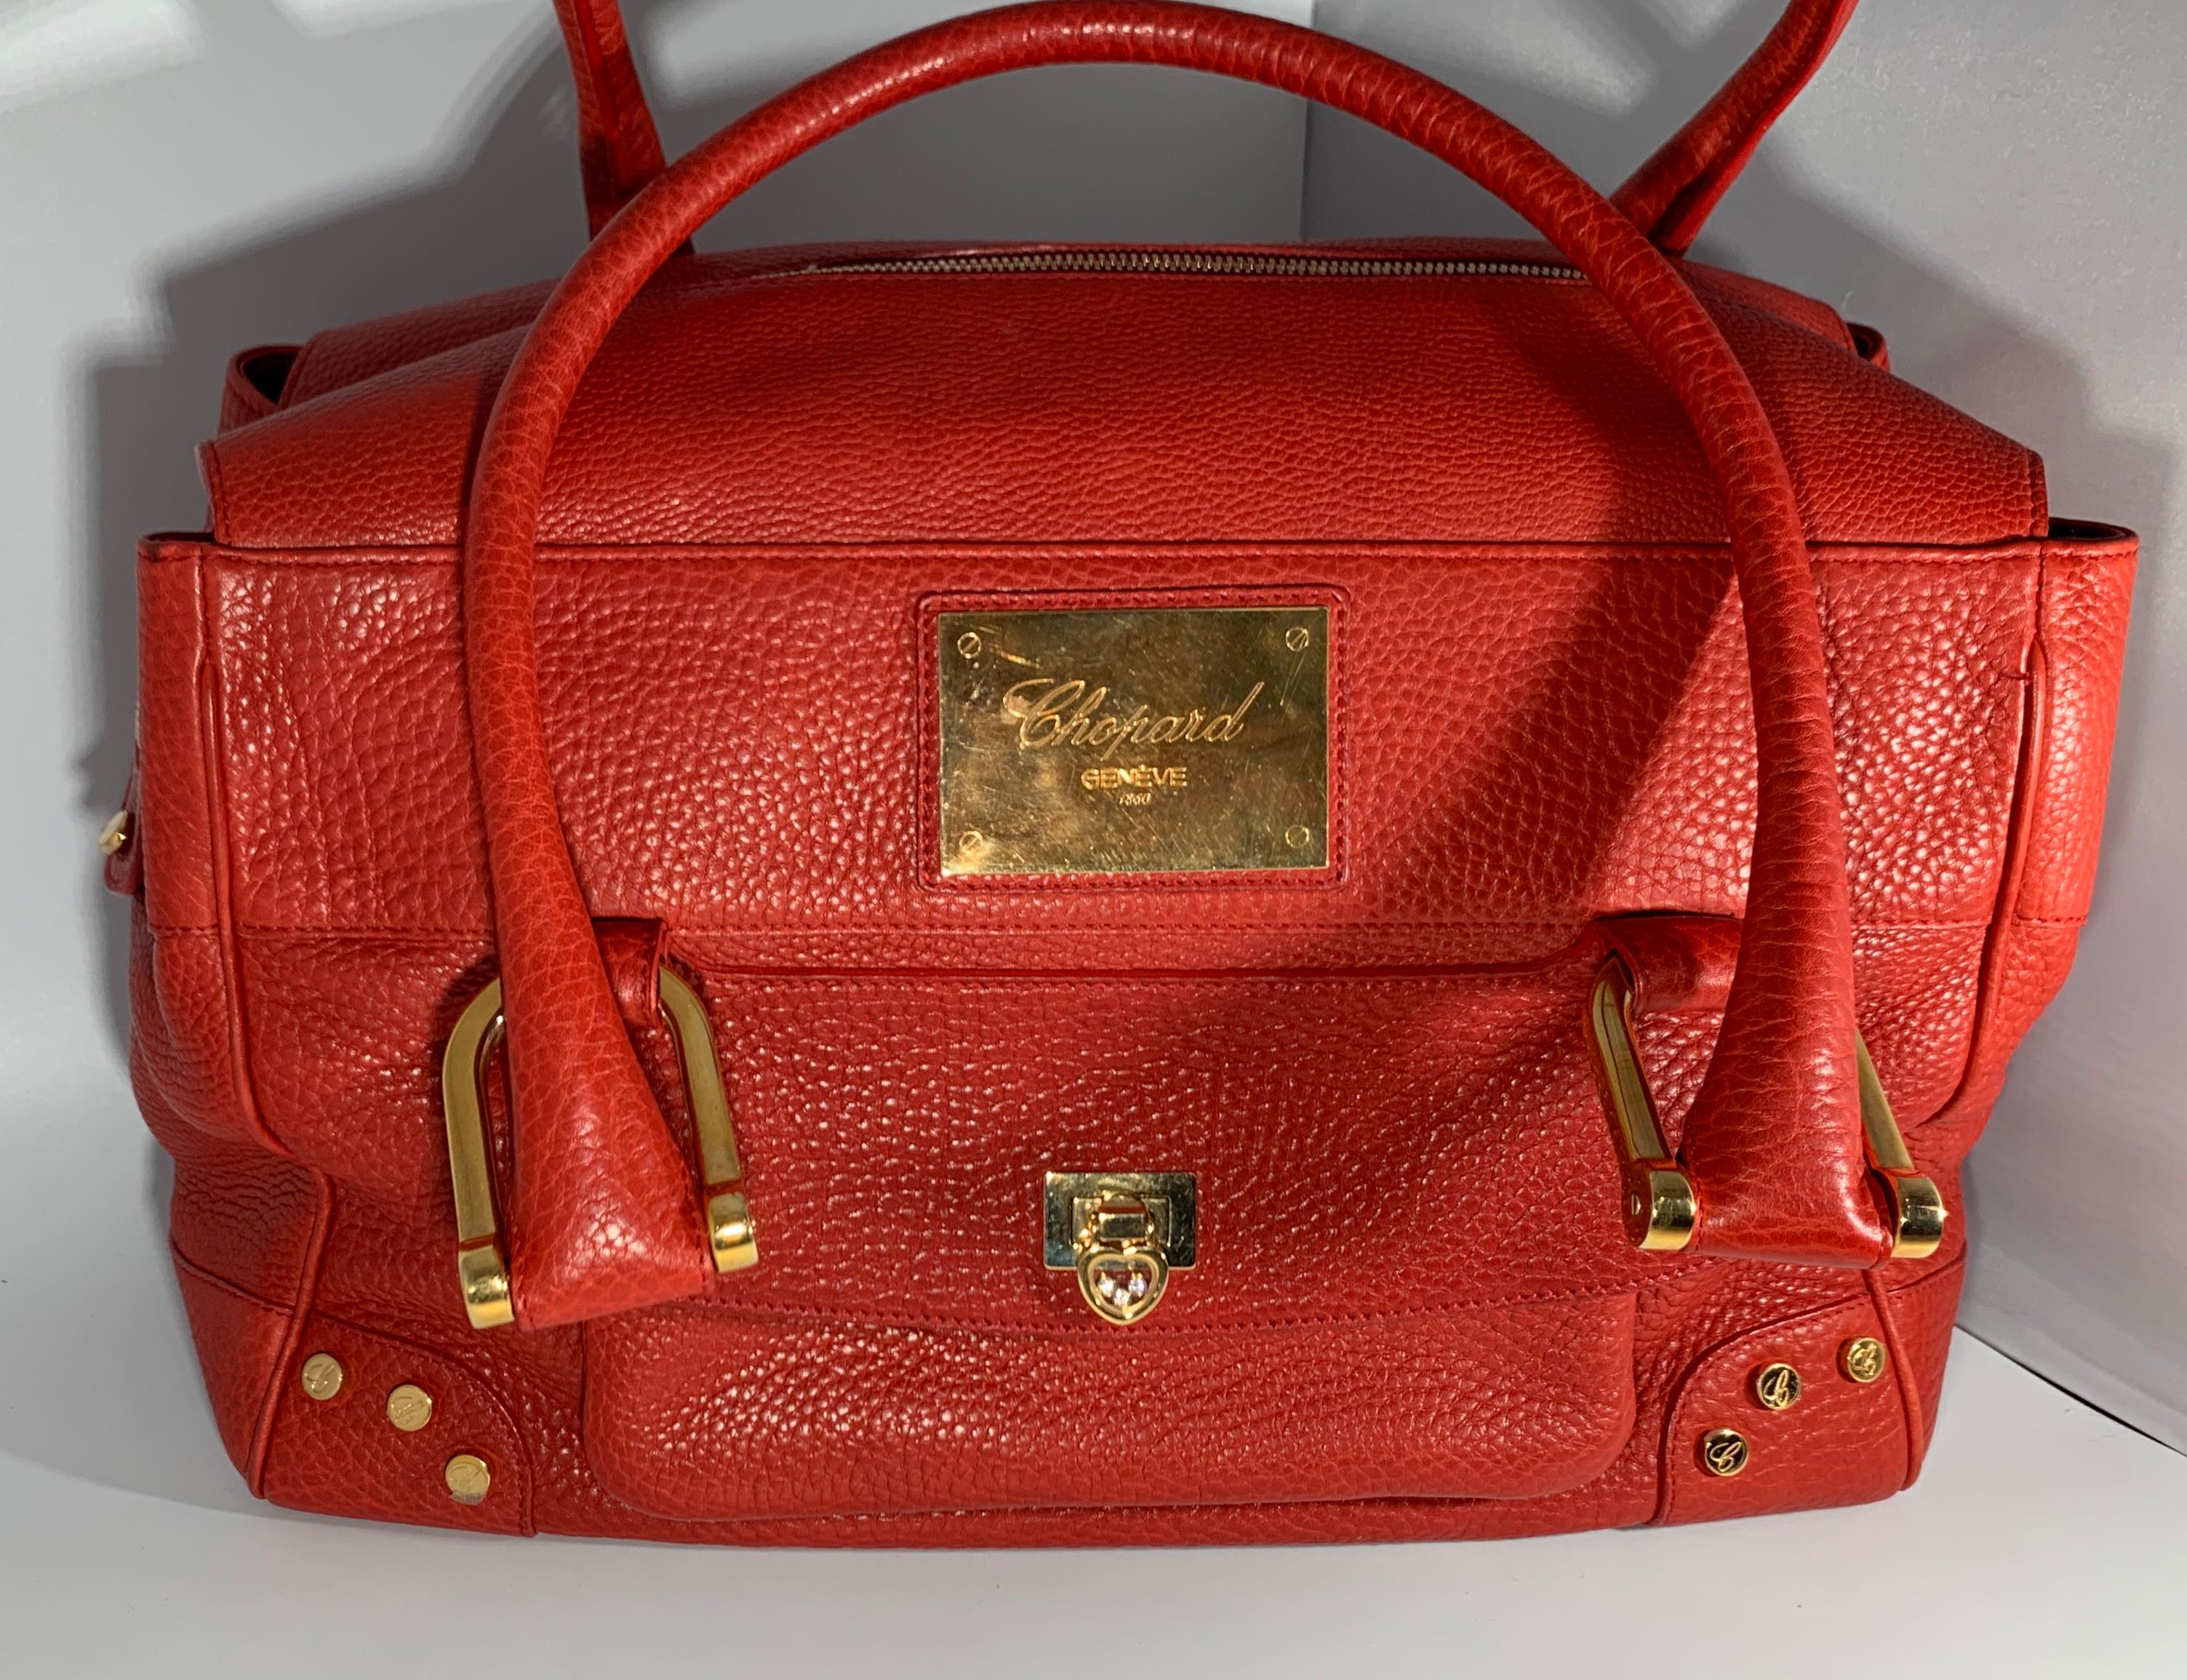 Chopard Red Leather Large Handbag,  happy diamond series heart closure.  2